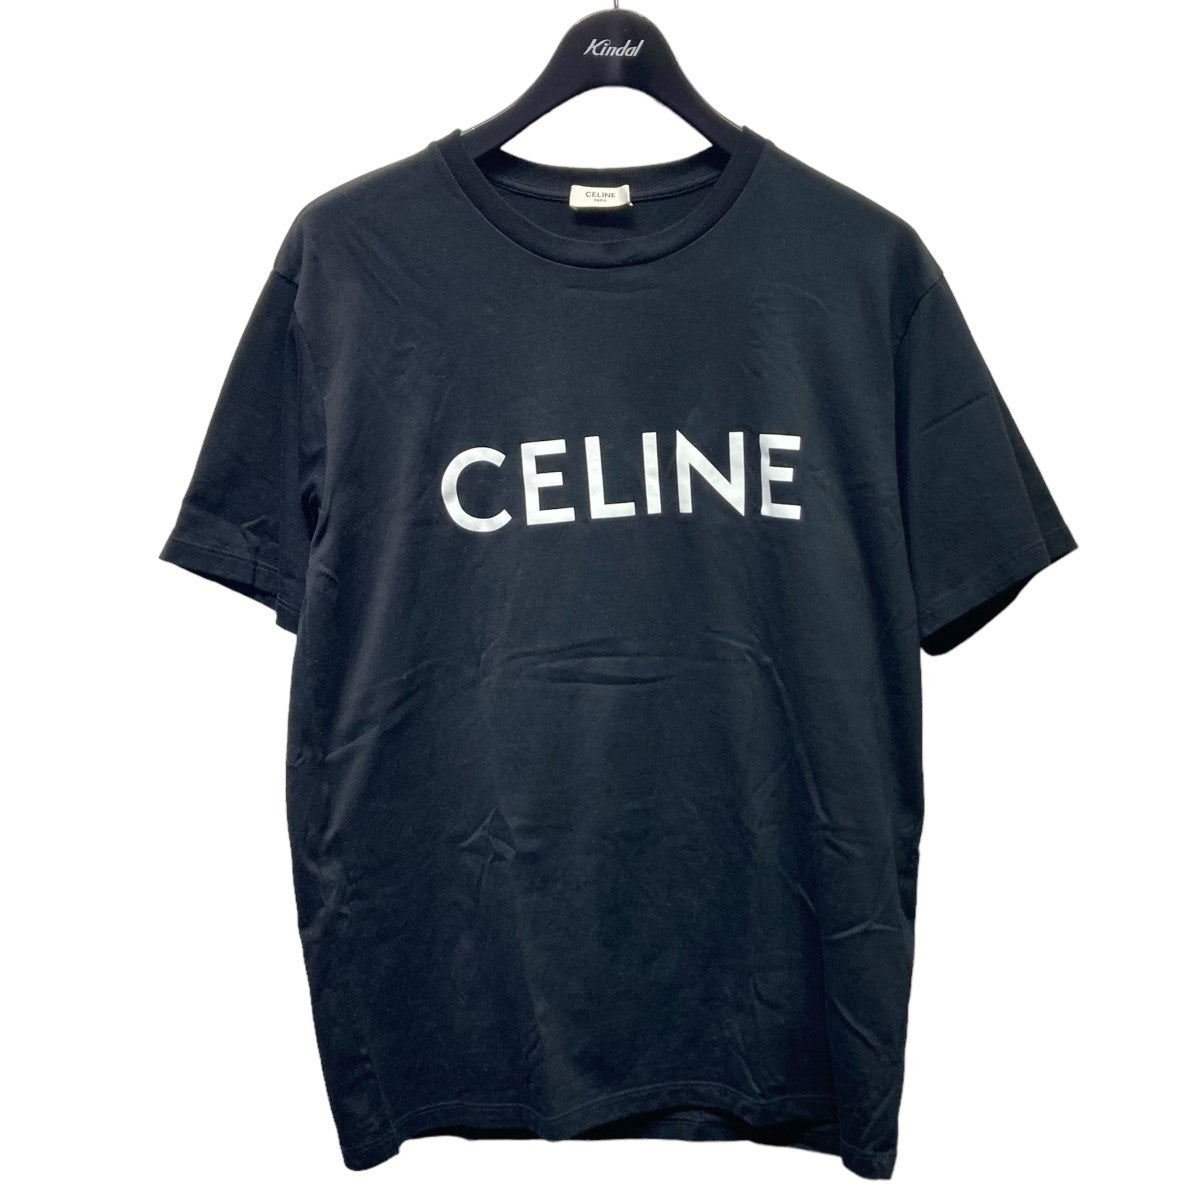 CELINE(セリーヌ) ルーズTシャツ 2X764671Q 2X764671Q ブラック サイズ 